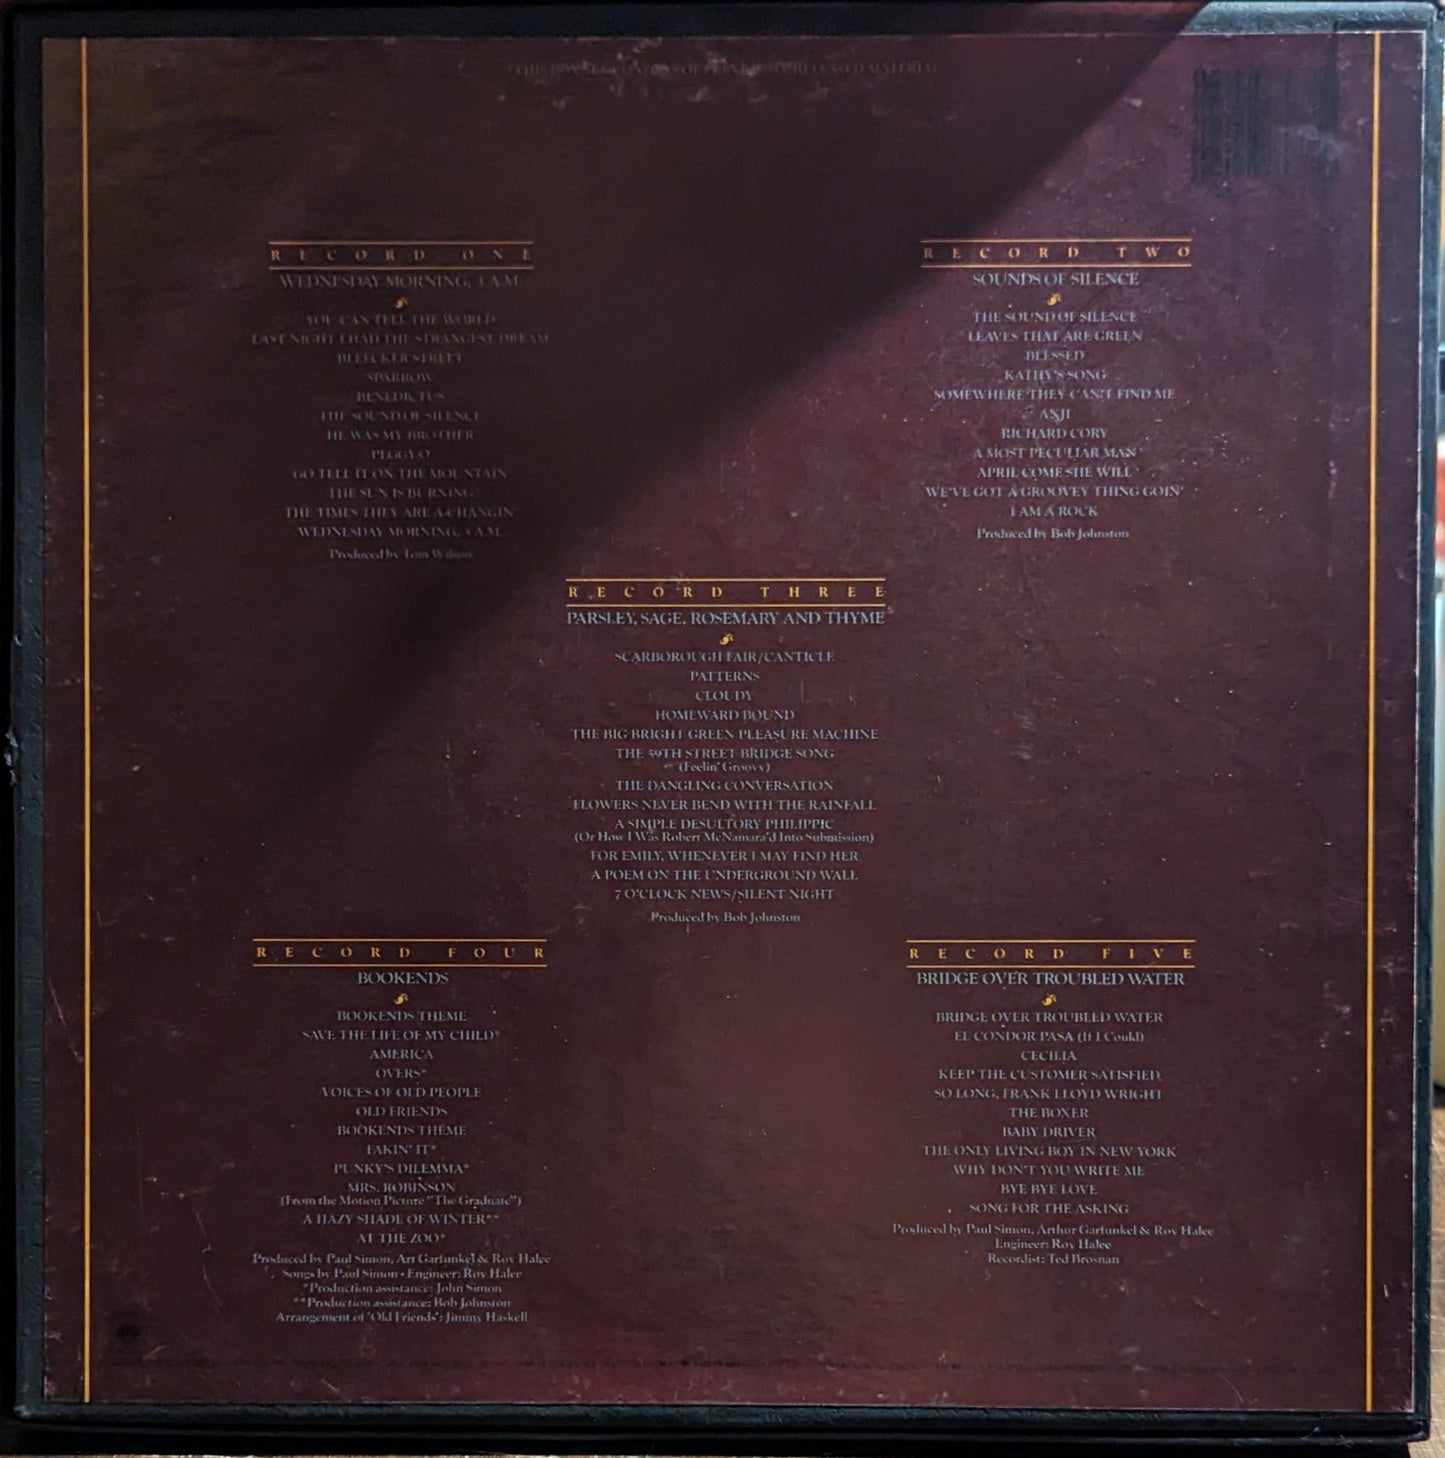 Simon & Garfunkel Collected Works 5xLP BOX Near Mint (NM or M-) Excellent (EX)